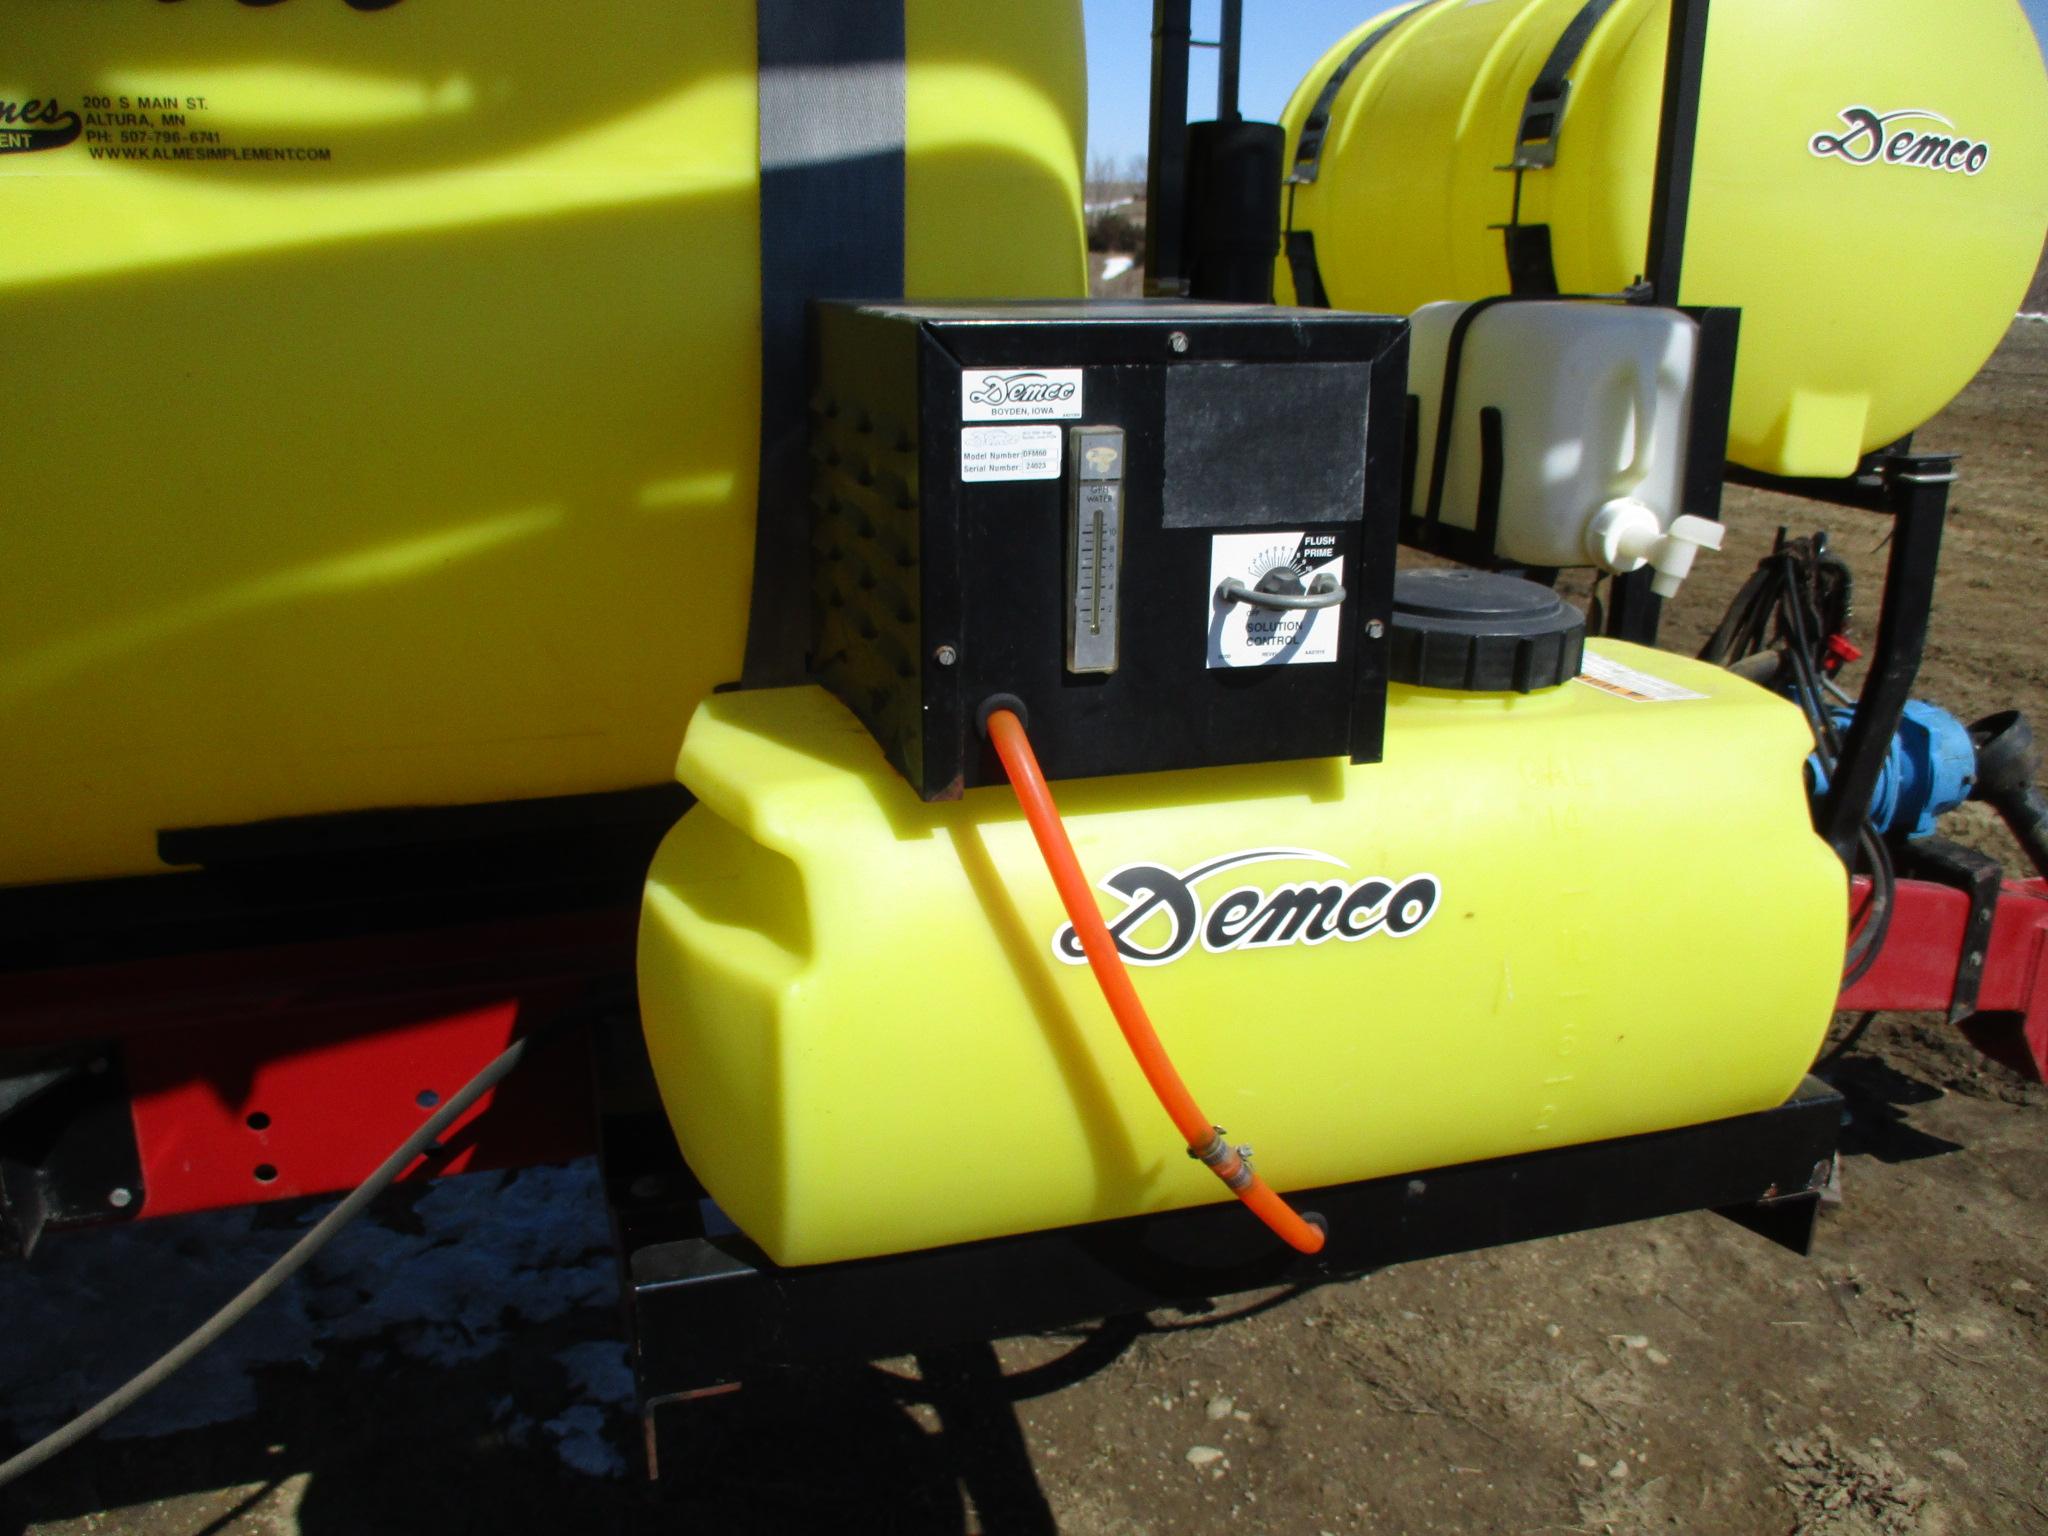 Demco 1000 gallon sprayer, 60' Hyd booms, PTO pump, Inductor, foam markers, rinse tank, Raven 440